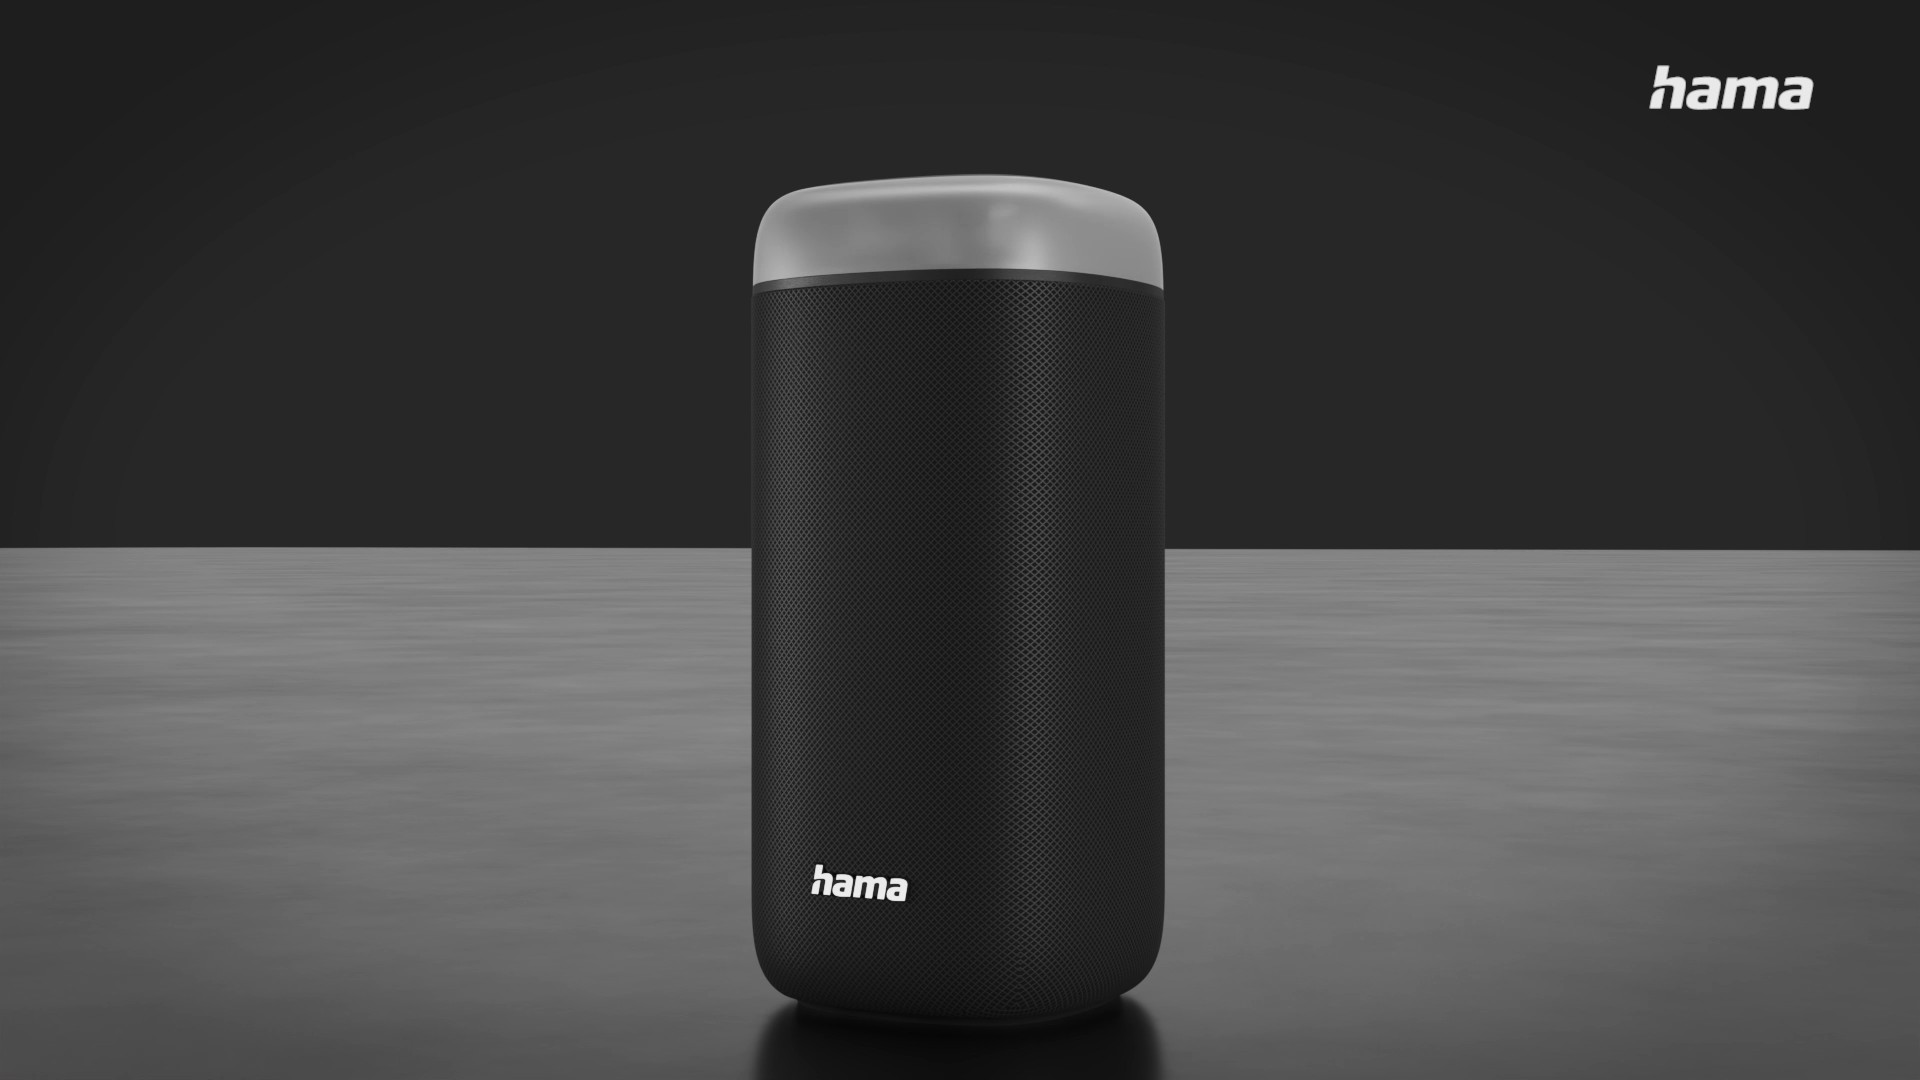 Hama "Shine 2.0" Bluetooth® Loudspeaker | Unboxing